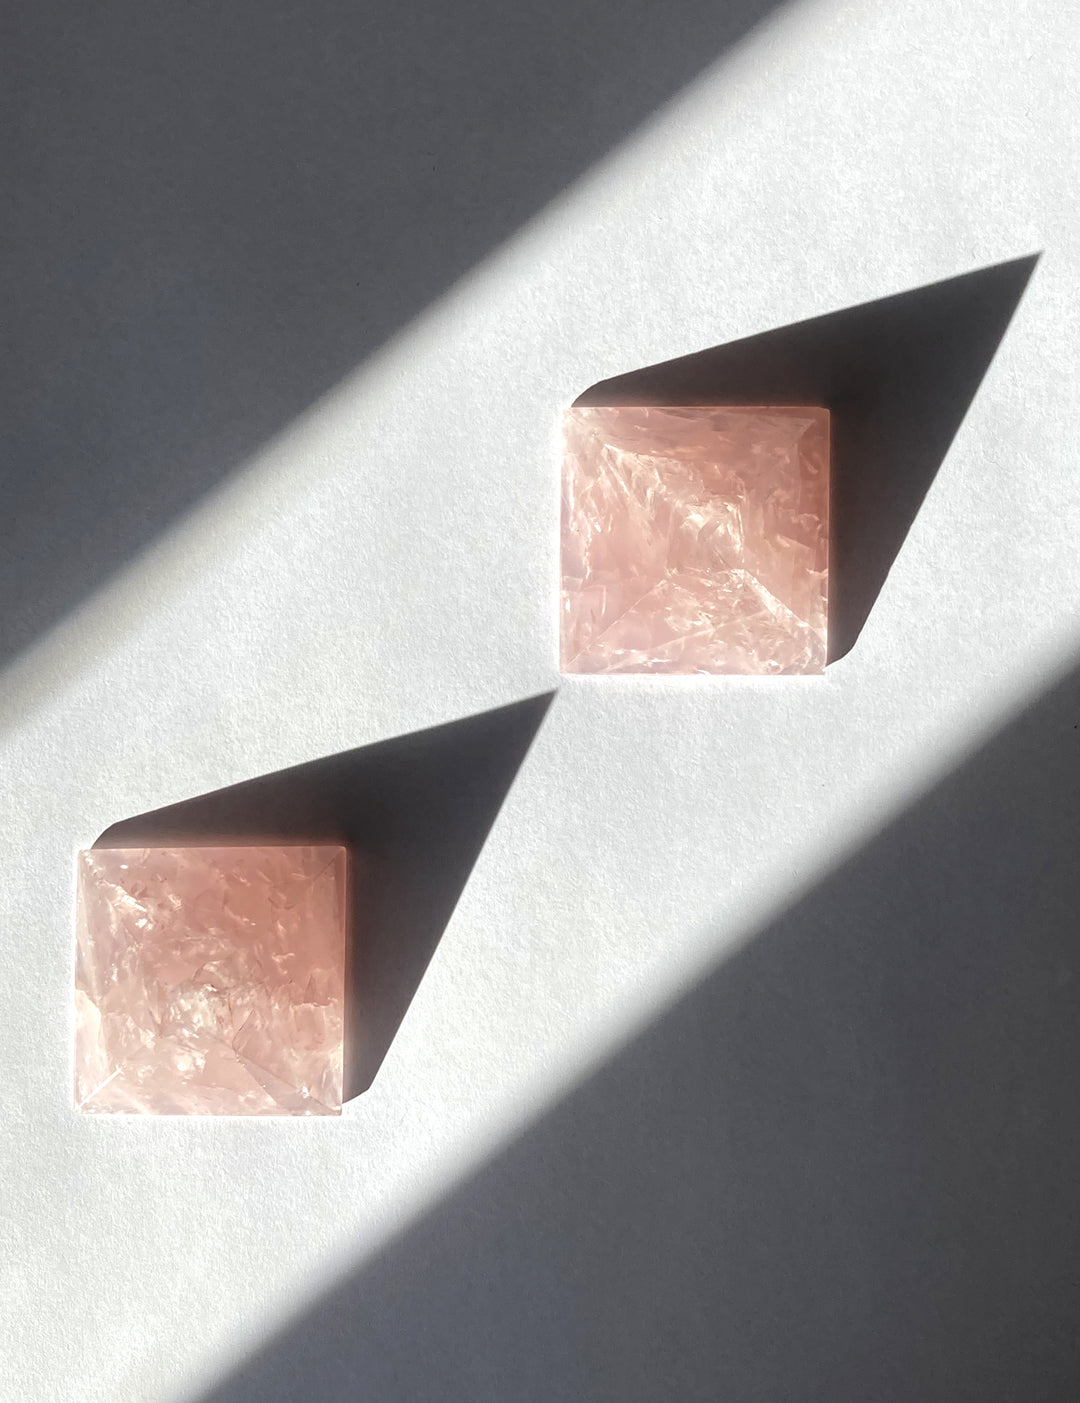 llayers pyramide pierre quartz rose lithothérapie méditation pink quartz stone pyramid